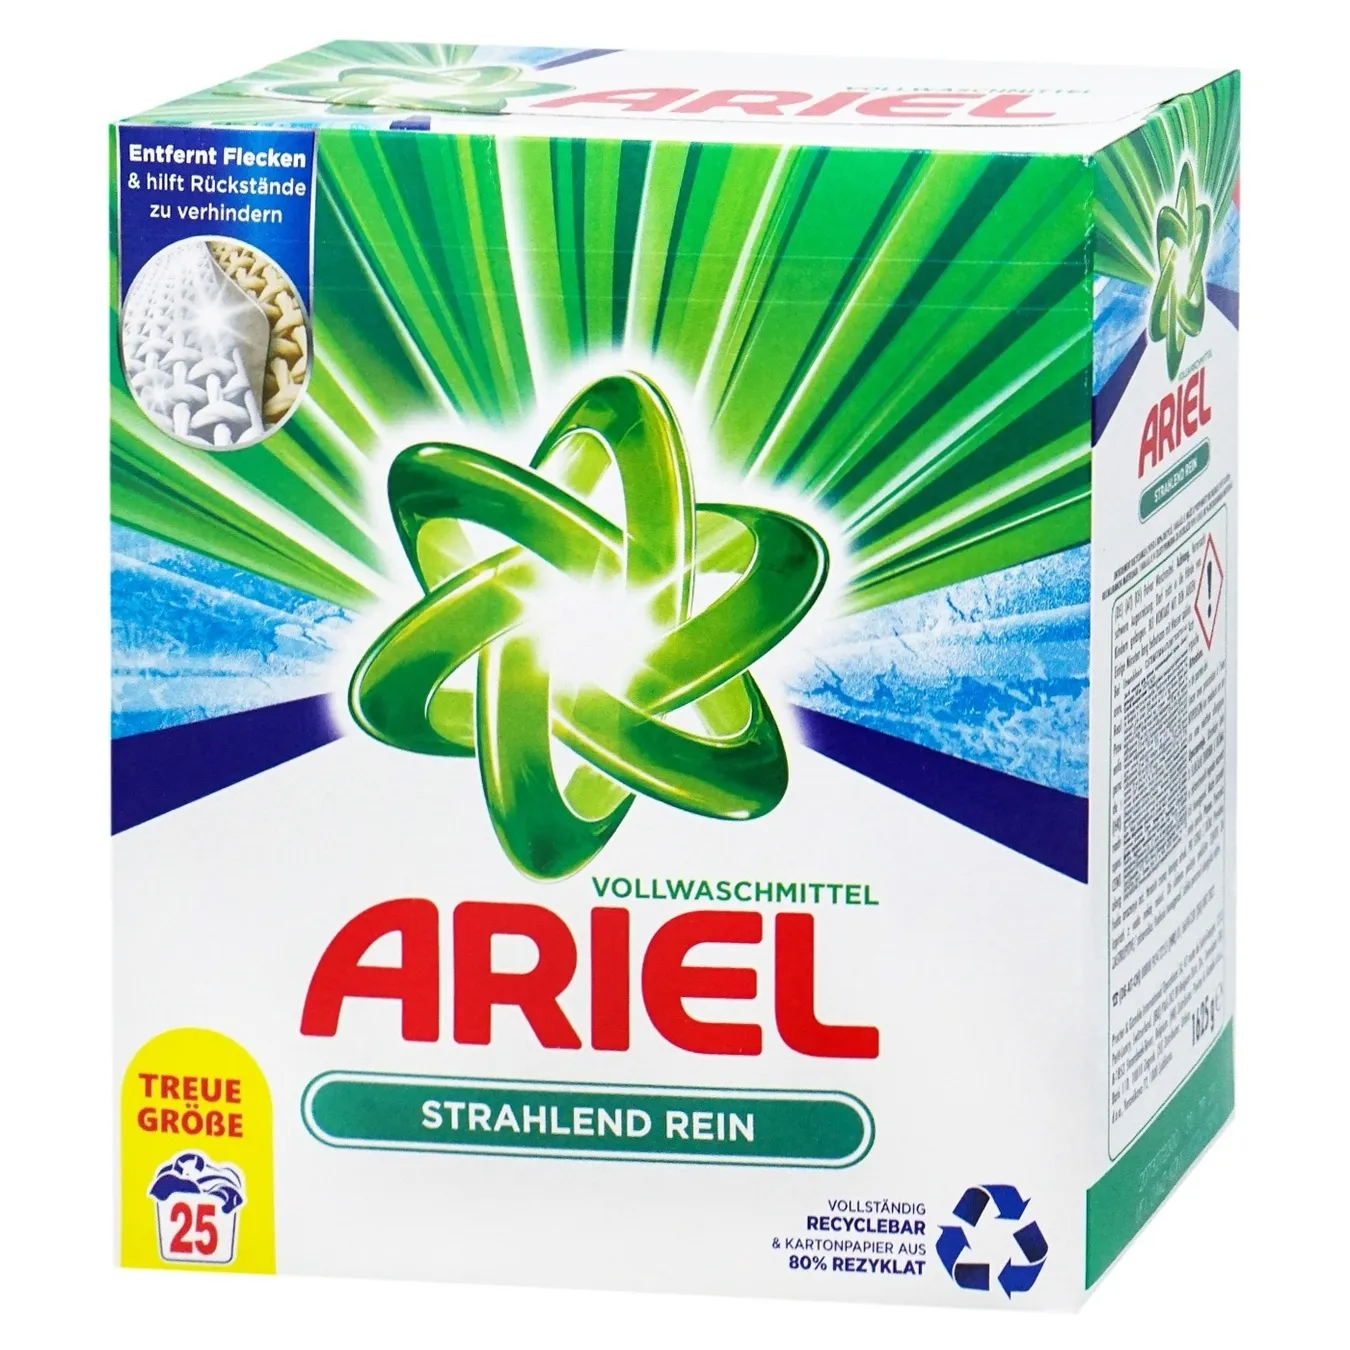 Ariel Pulver Regular washing powder 1.625 kg